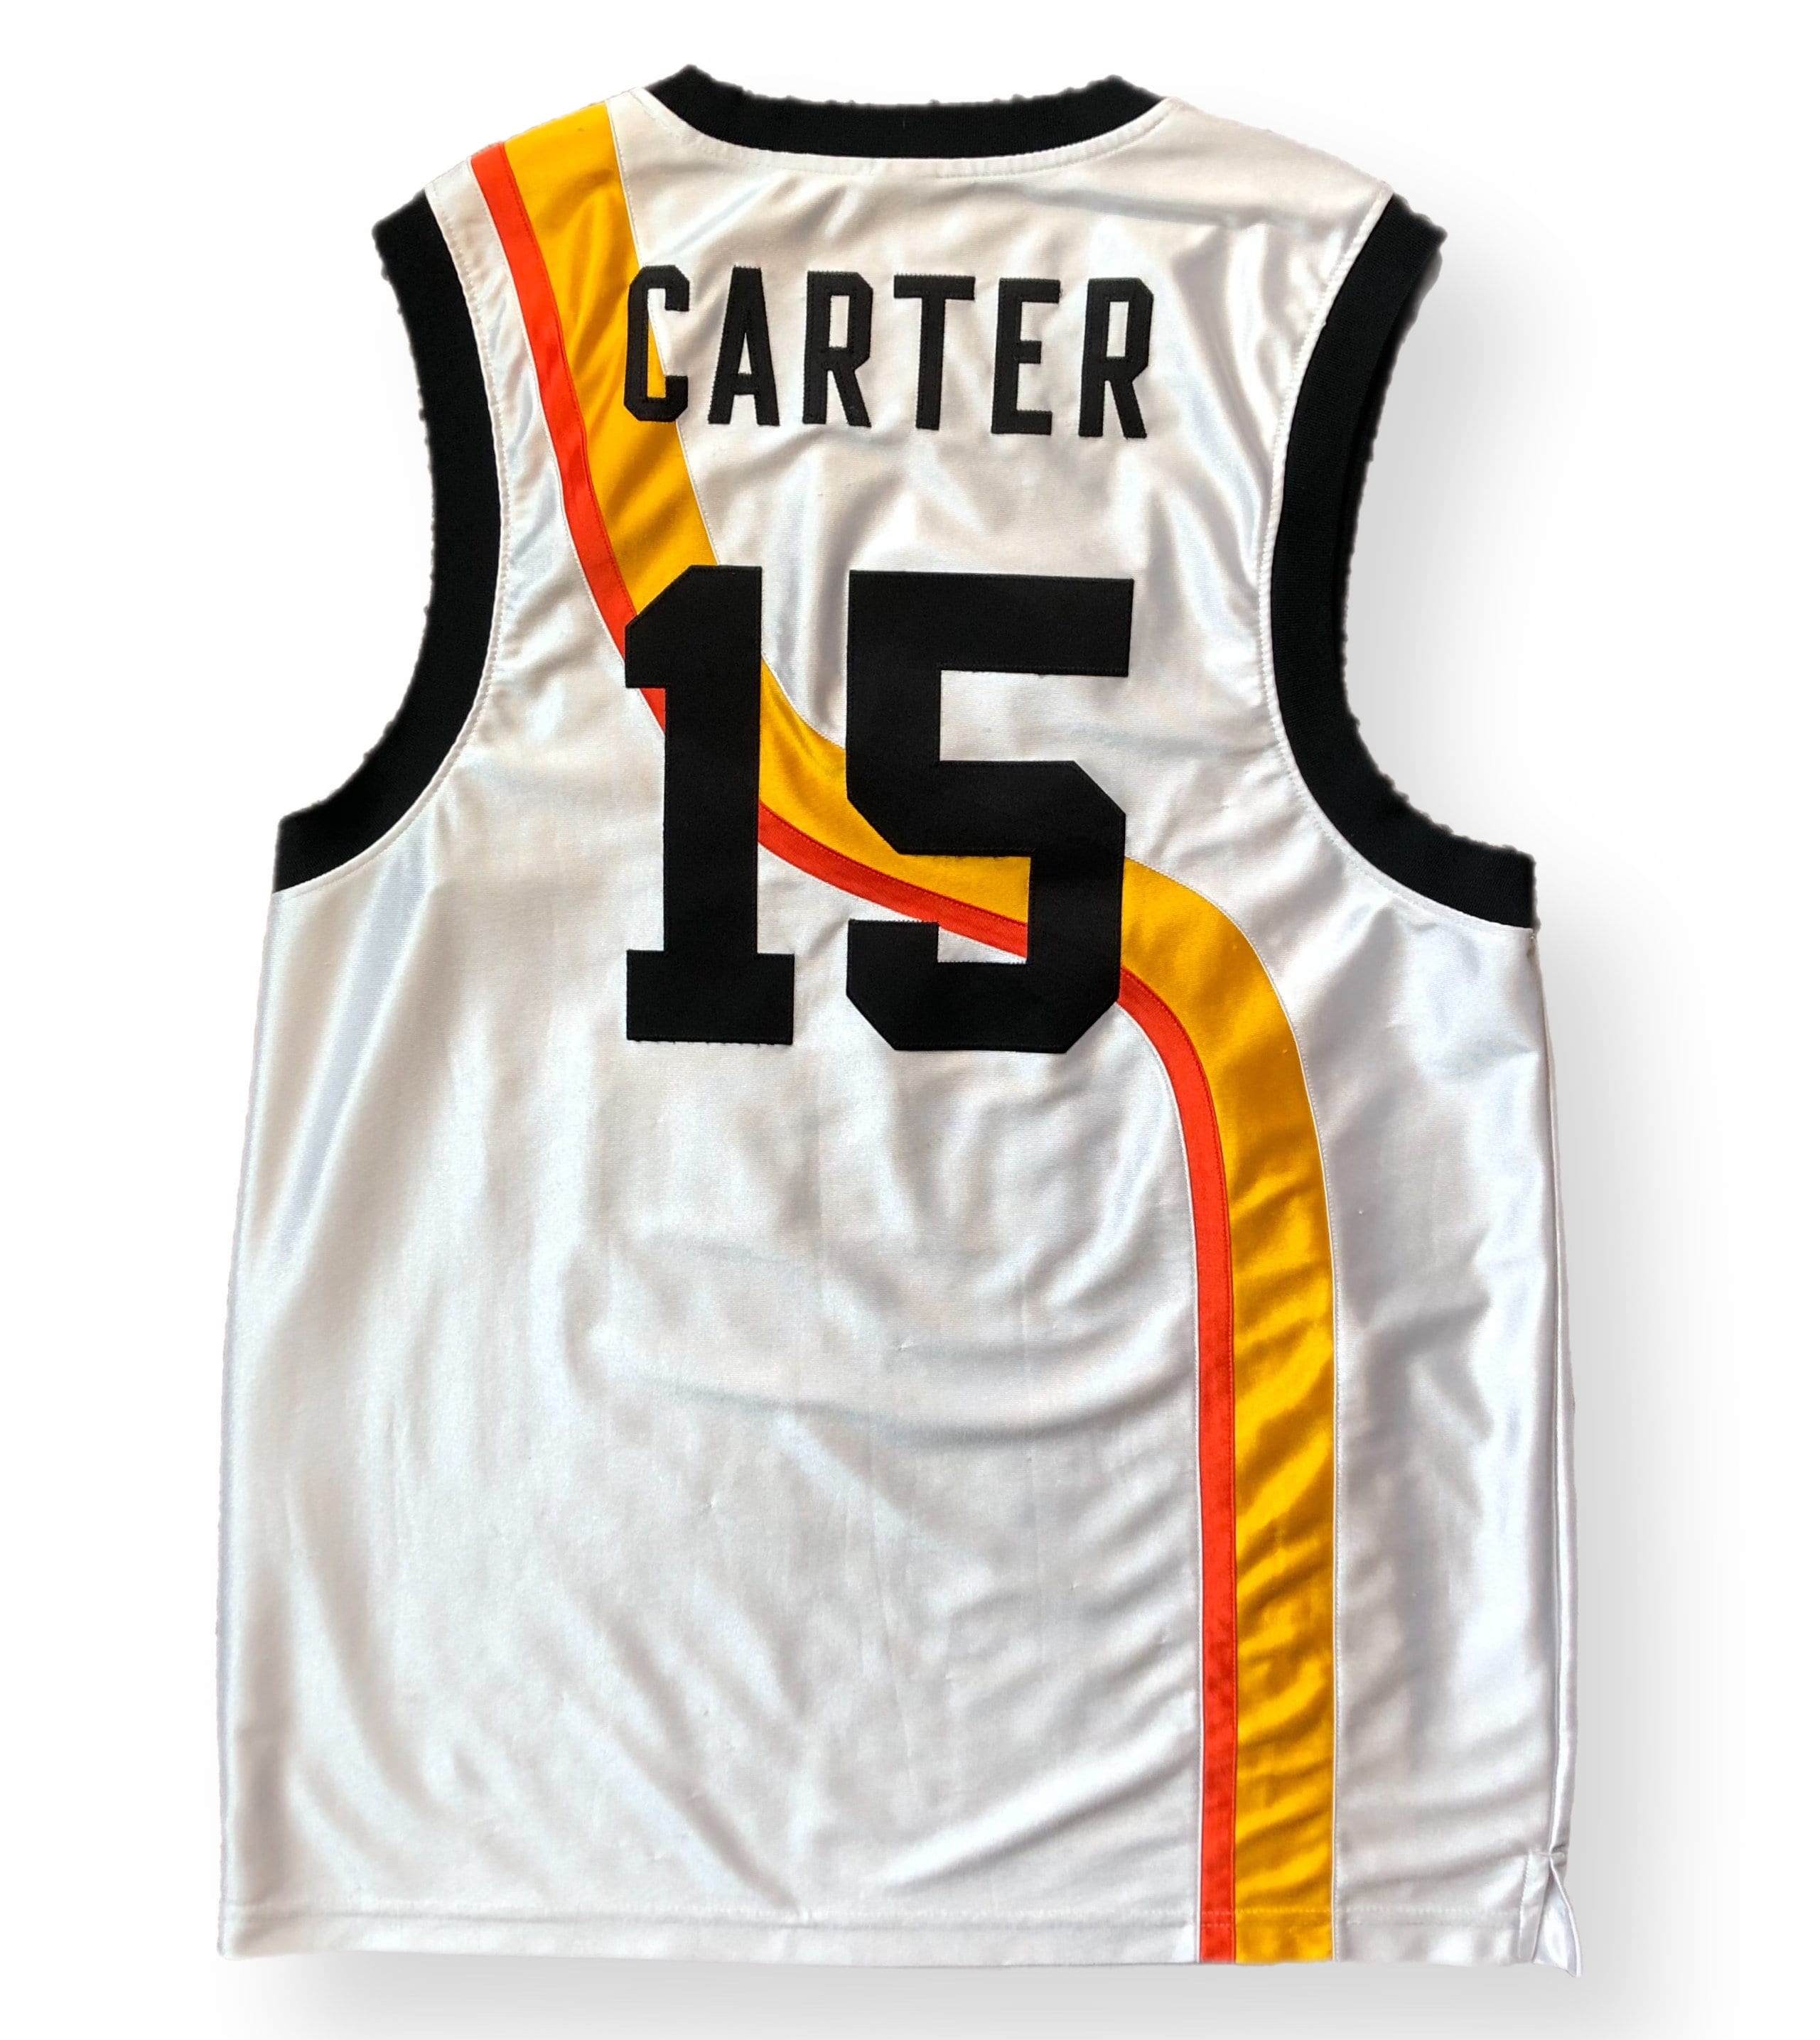 Nike Roswell Rayguns Basketball Jersey- Carter